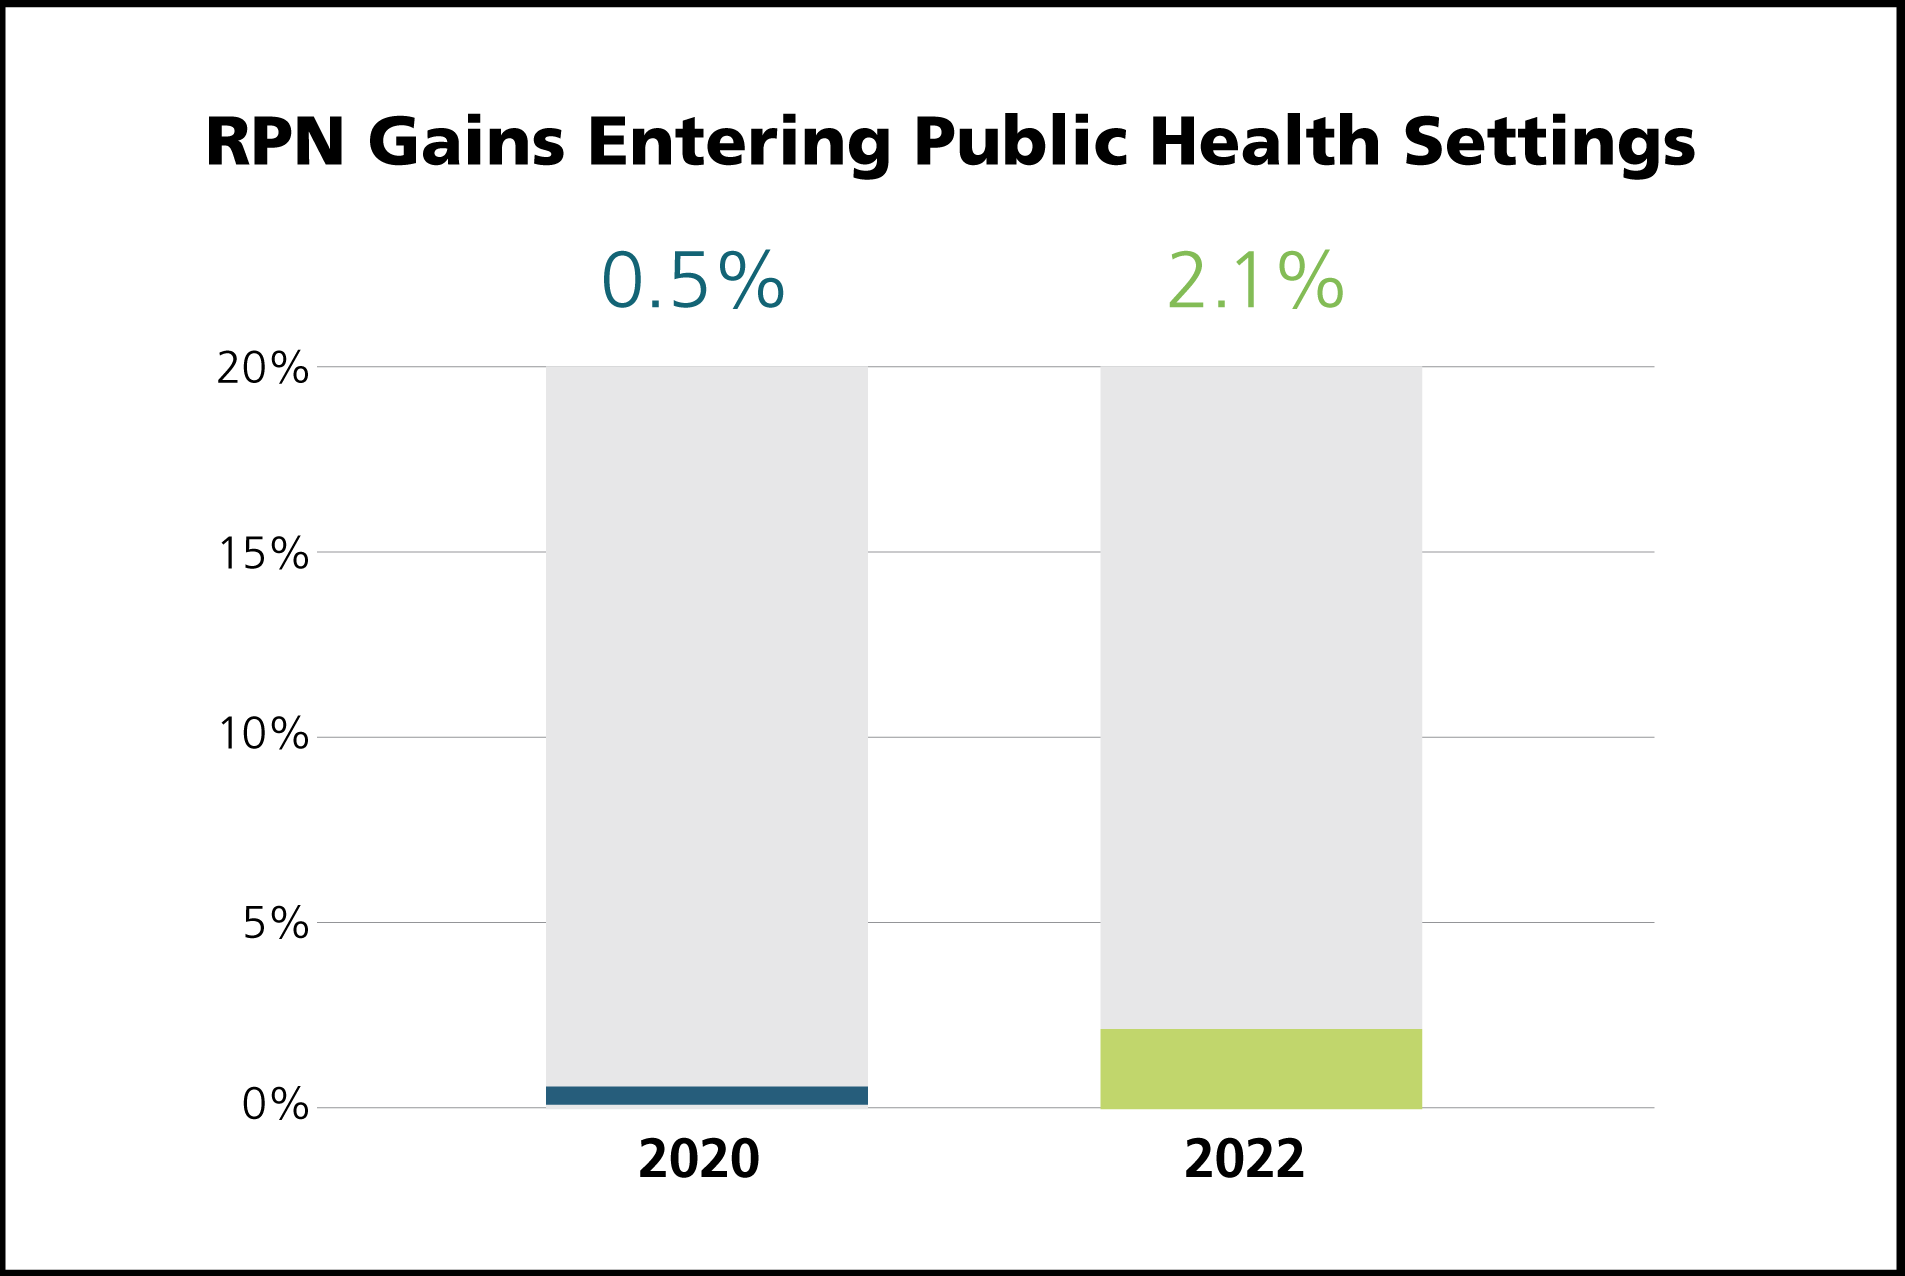 RPN Gains Entering Public Health Settings: 2020-0.5%, 2022-2.1%